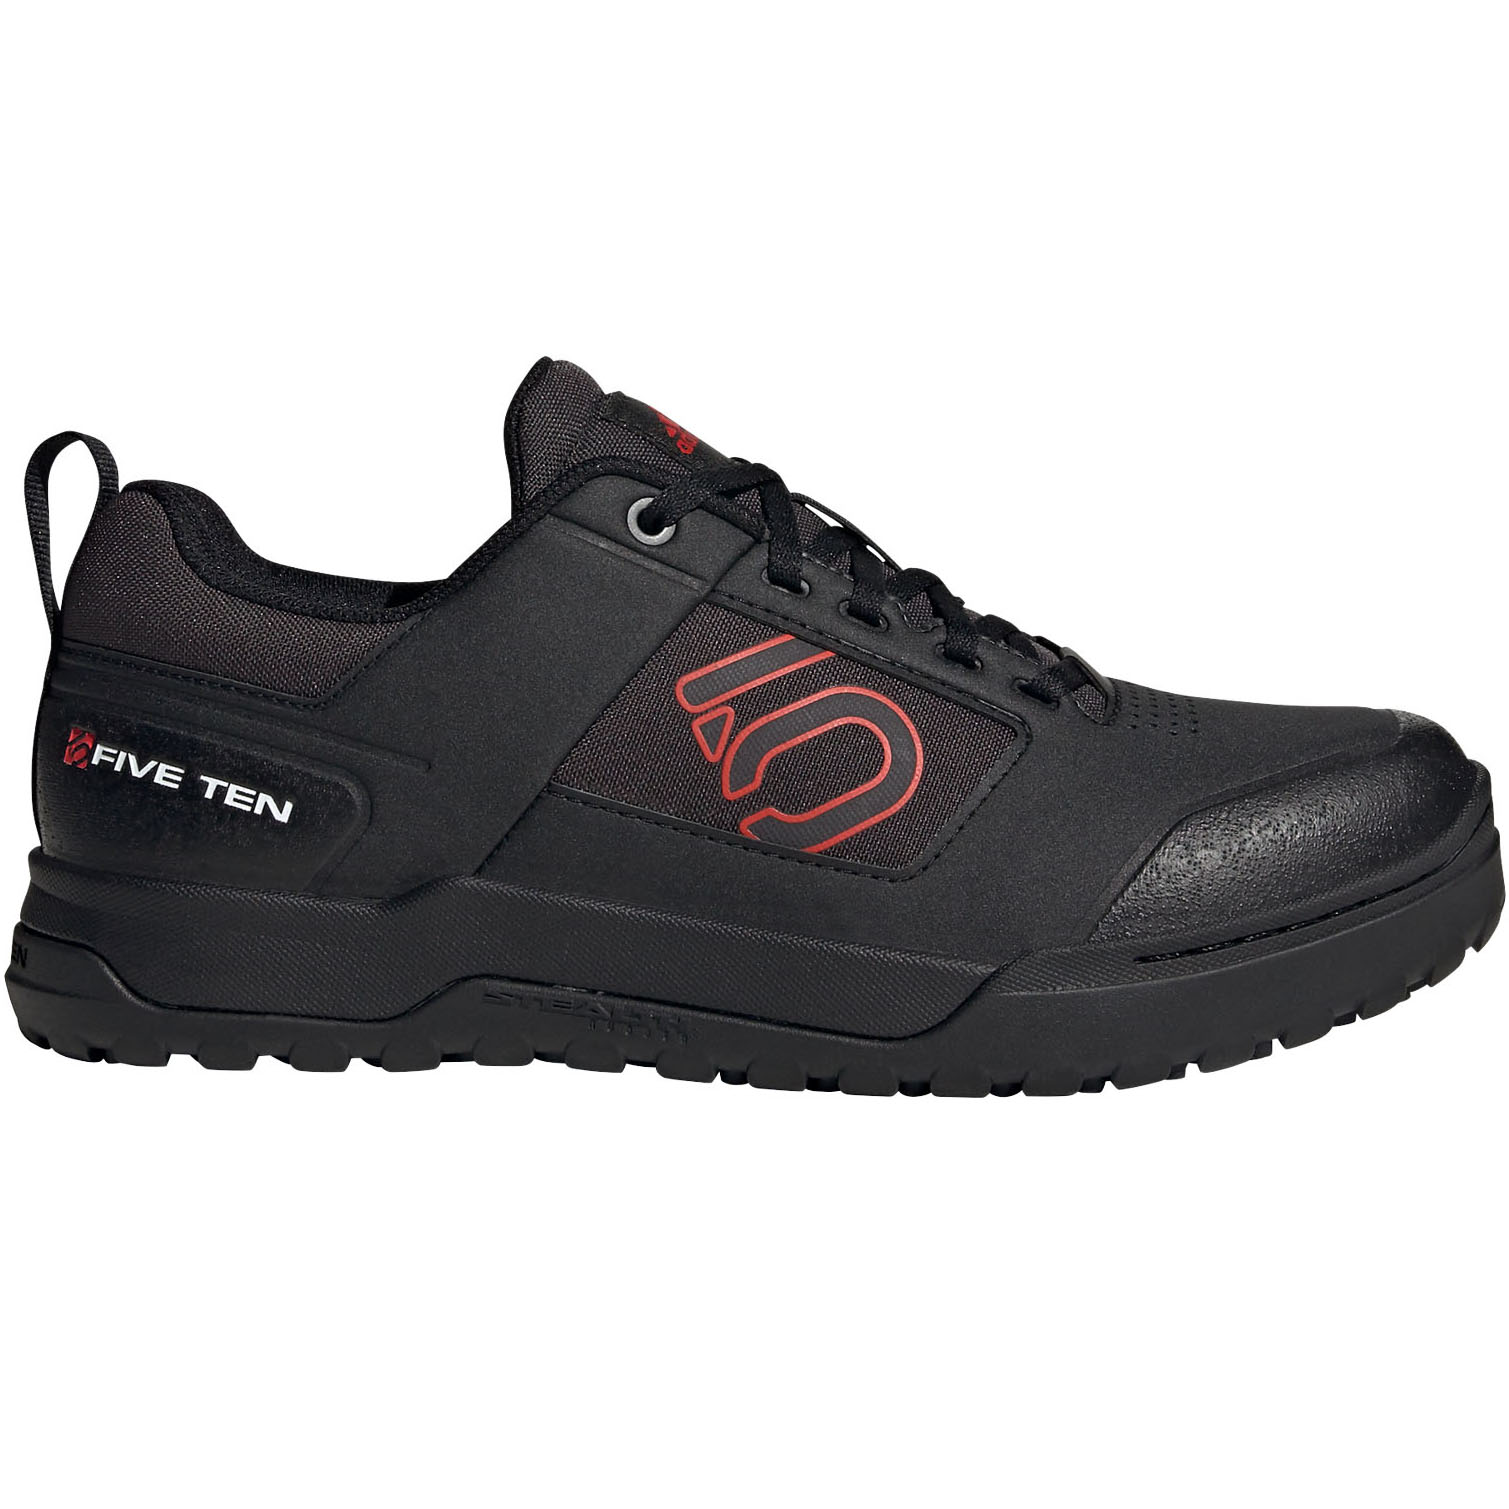 Image of Five Ten Impact Pro Mountain Bike Shoes - core black/red